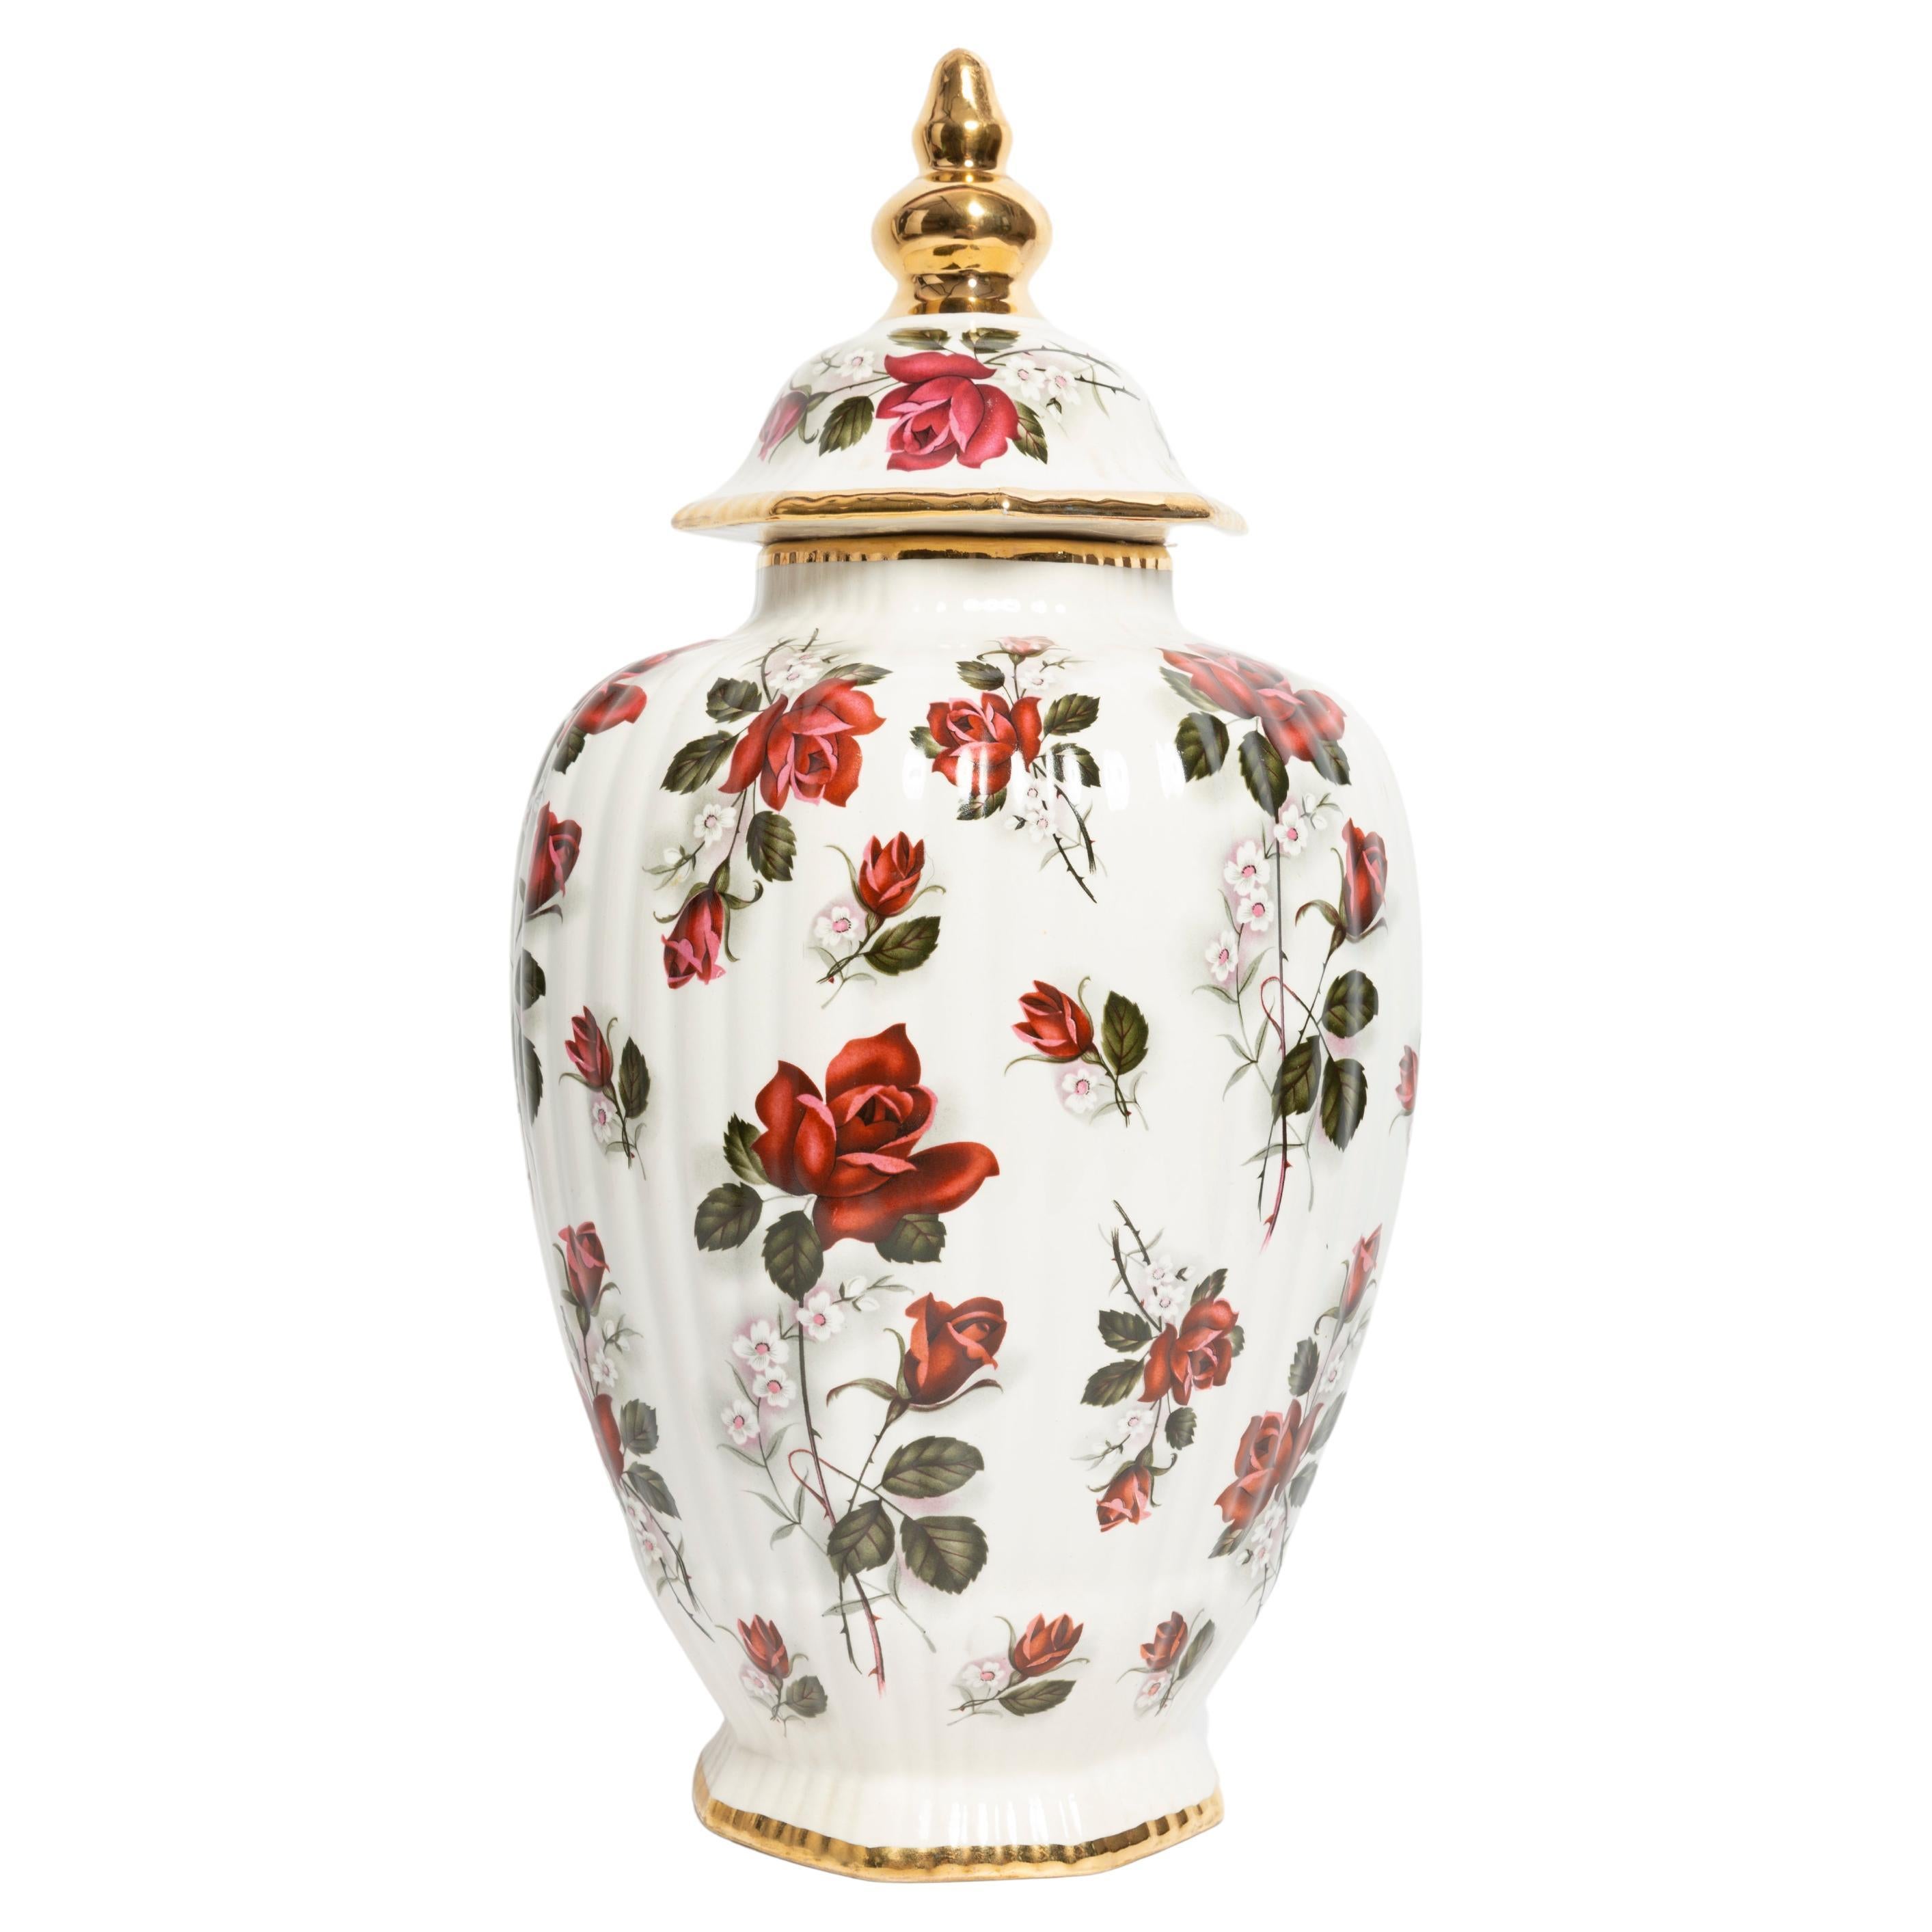 Big Ceramic Hand Painted Roses Vase Candy Box, 20th Century, Belgium, 1960s For Sale